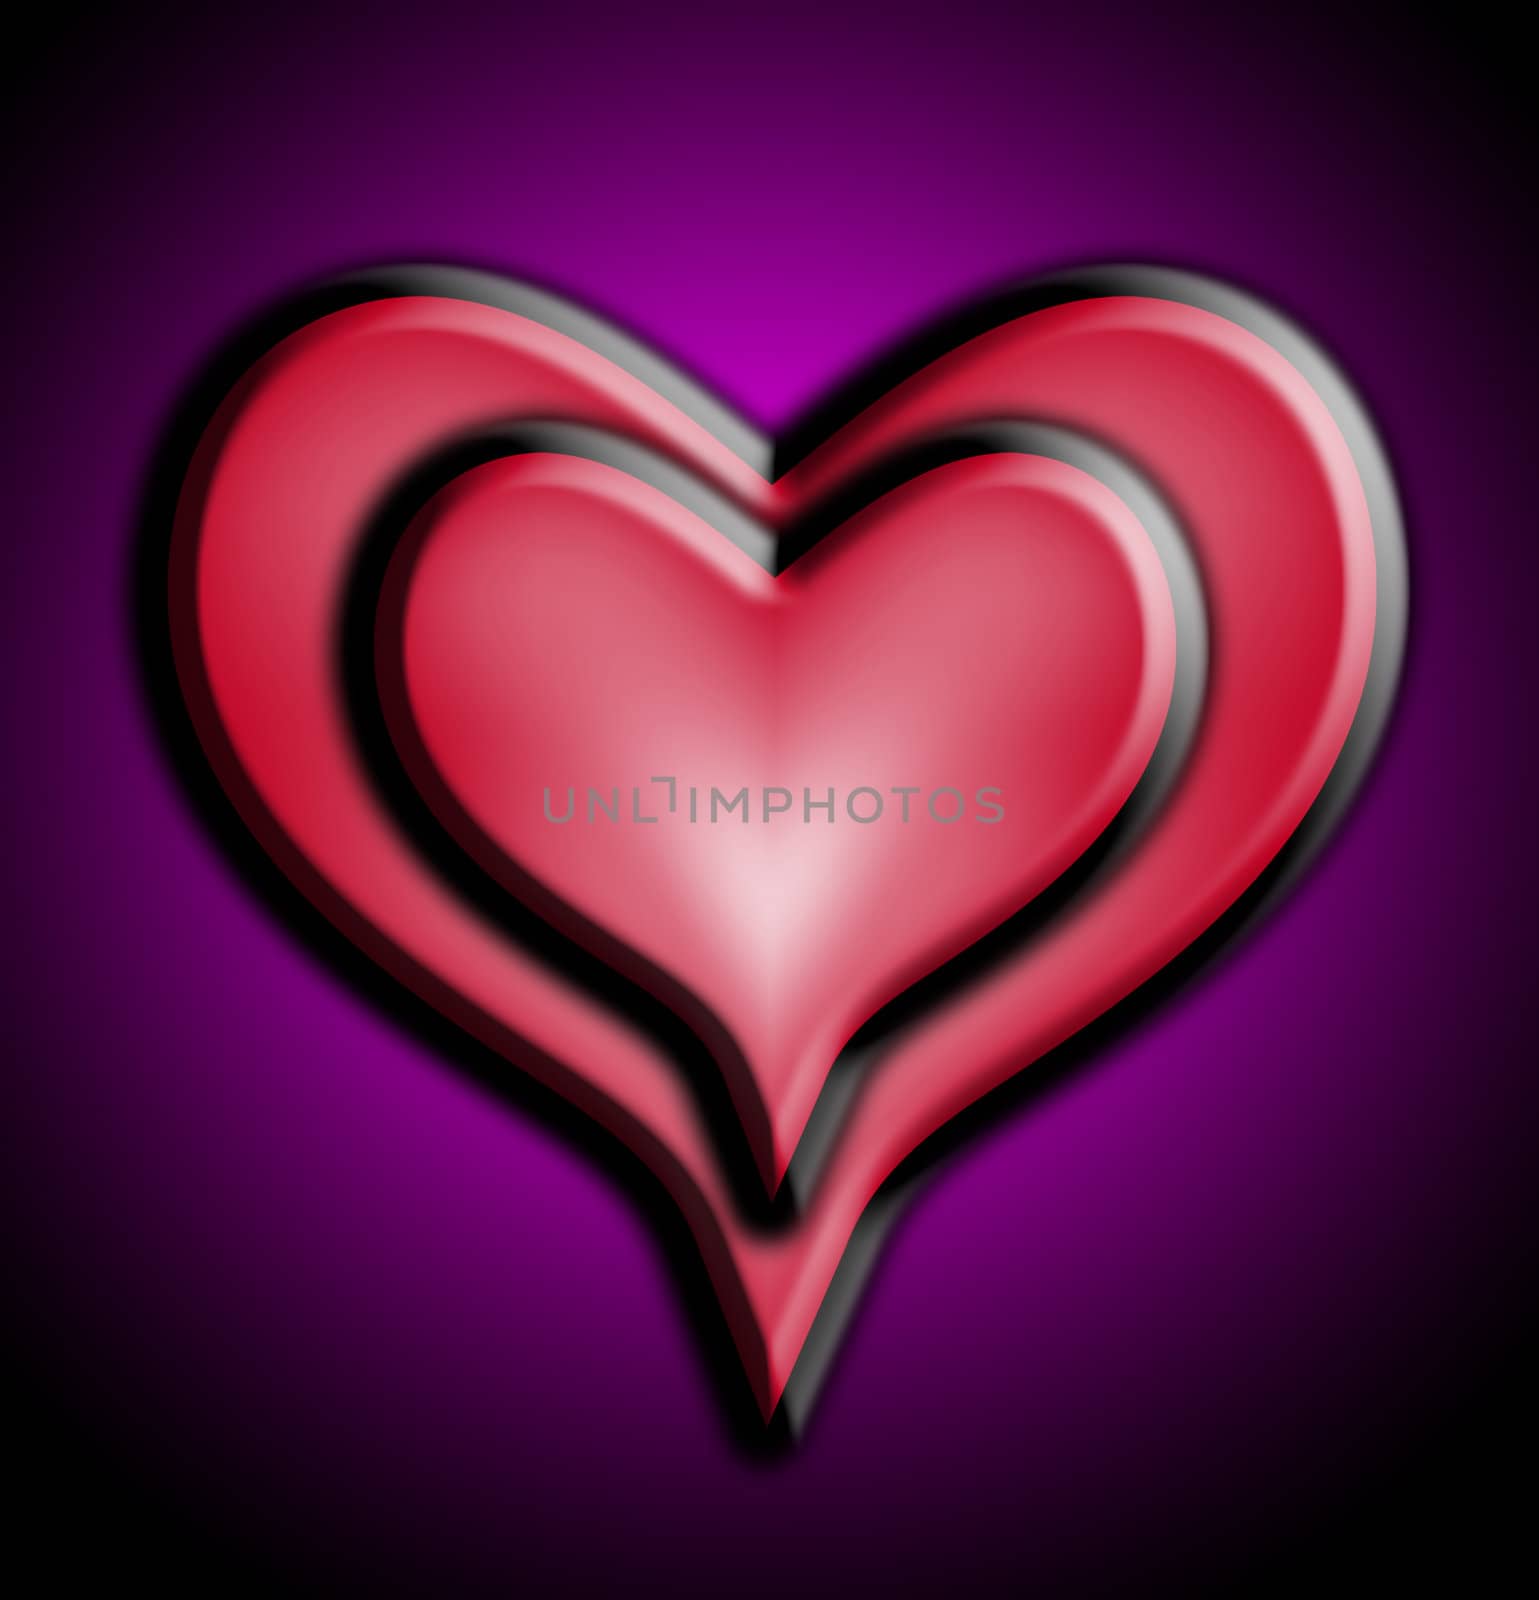 Heart Of Love by harveysart